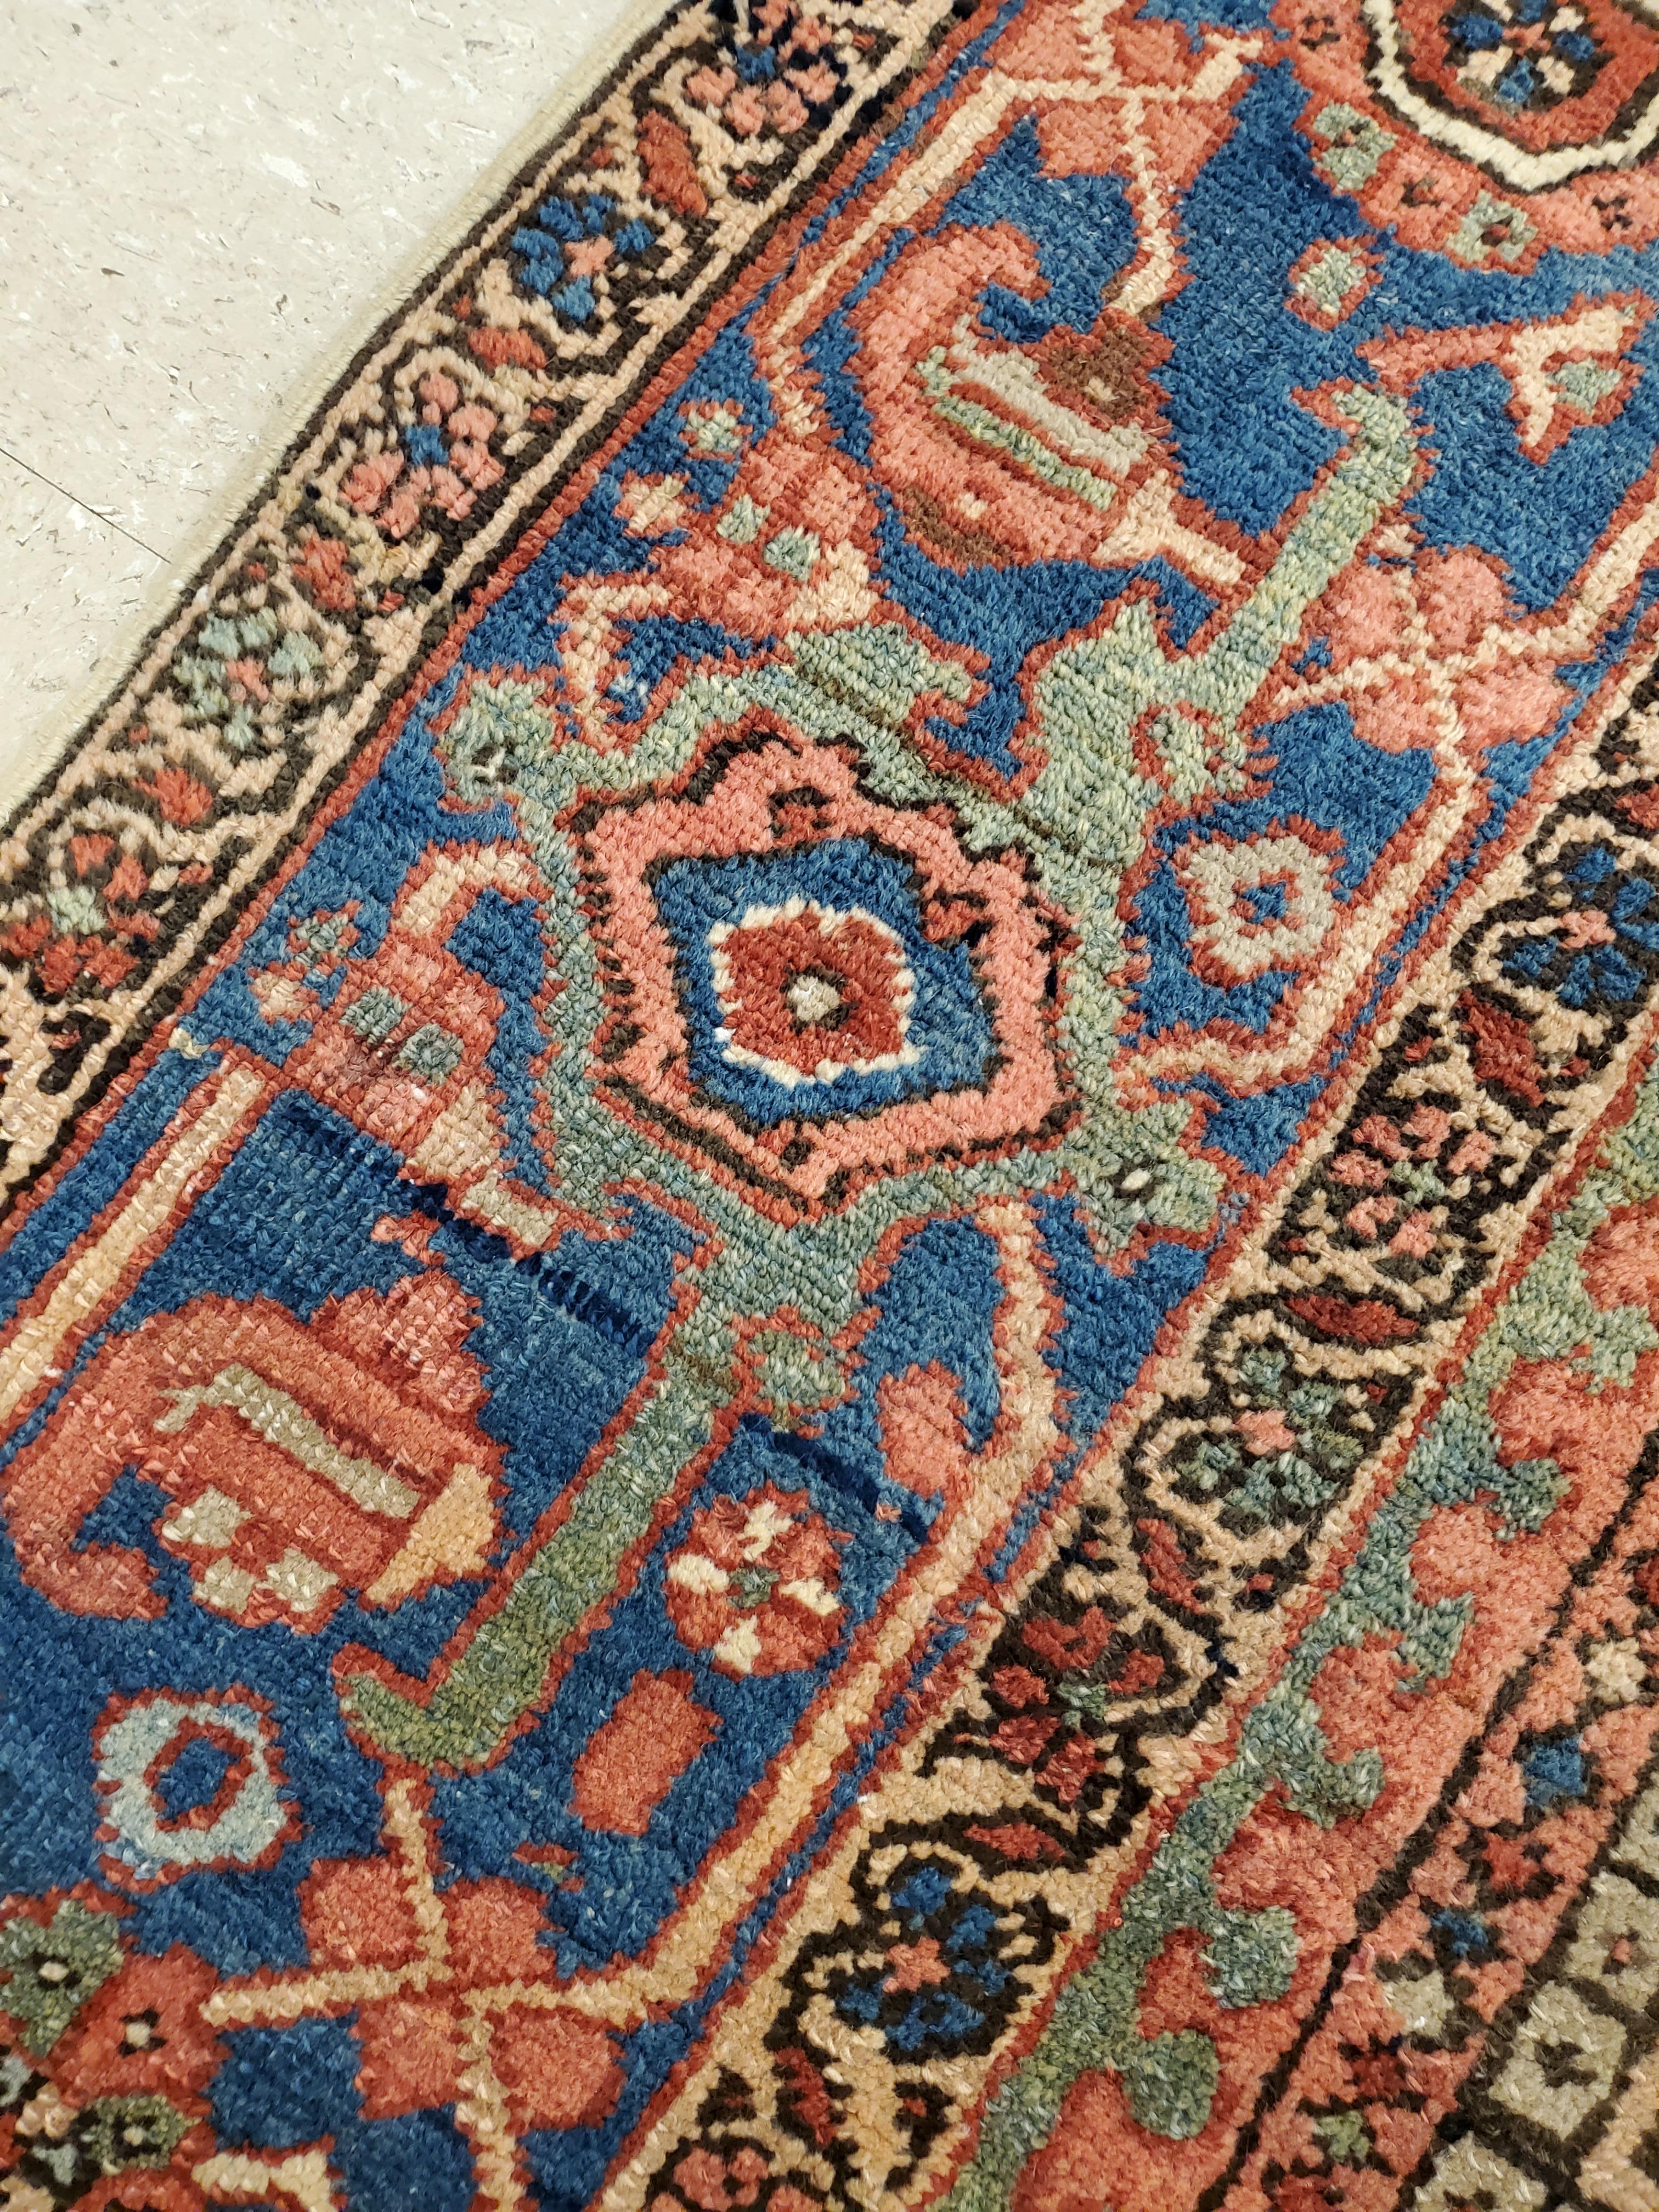 20th Century Antique Persian Heriz Carpet Handmade Wool Oriental Rug, Rust, Navy, Light Blue For Sale